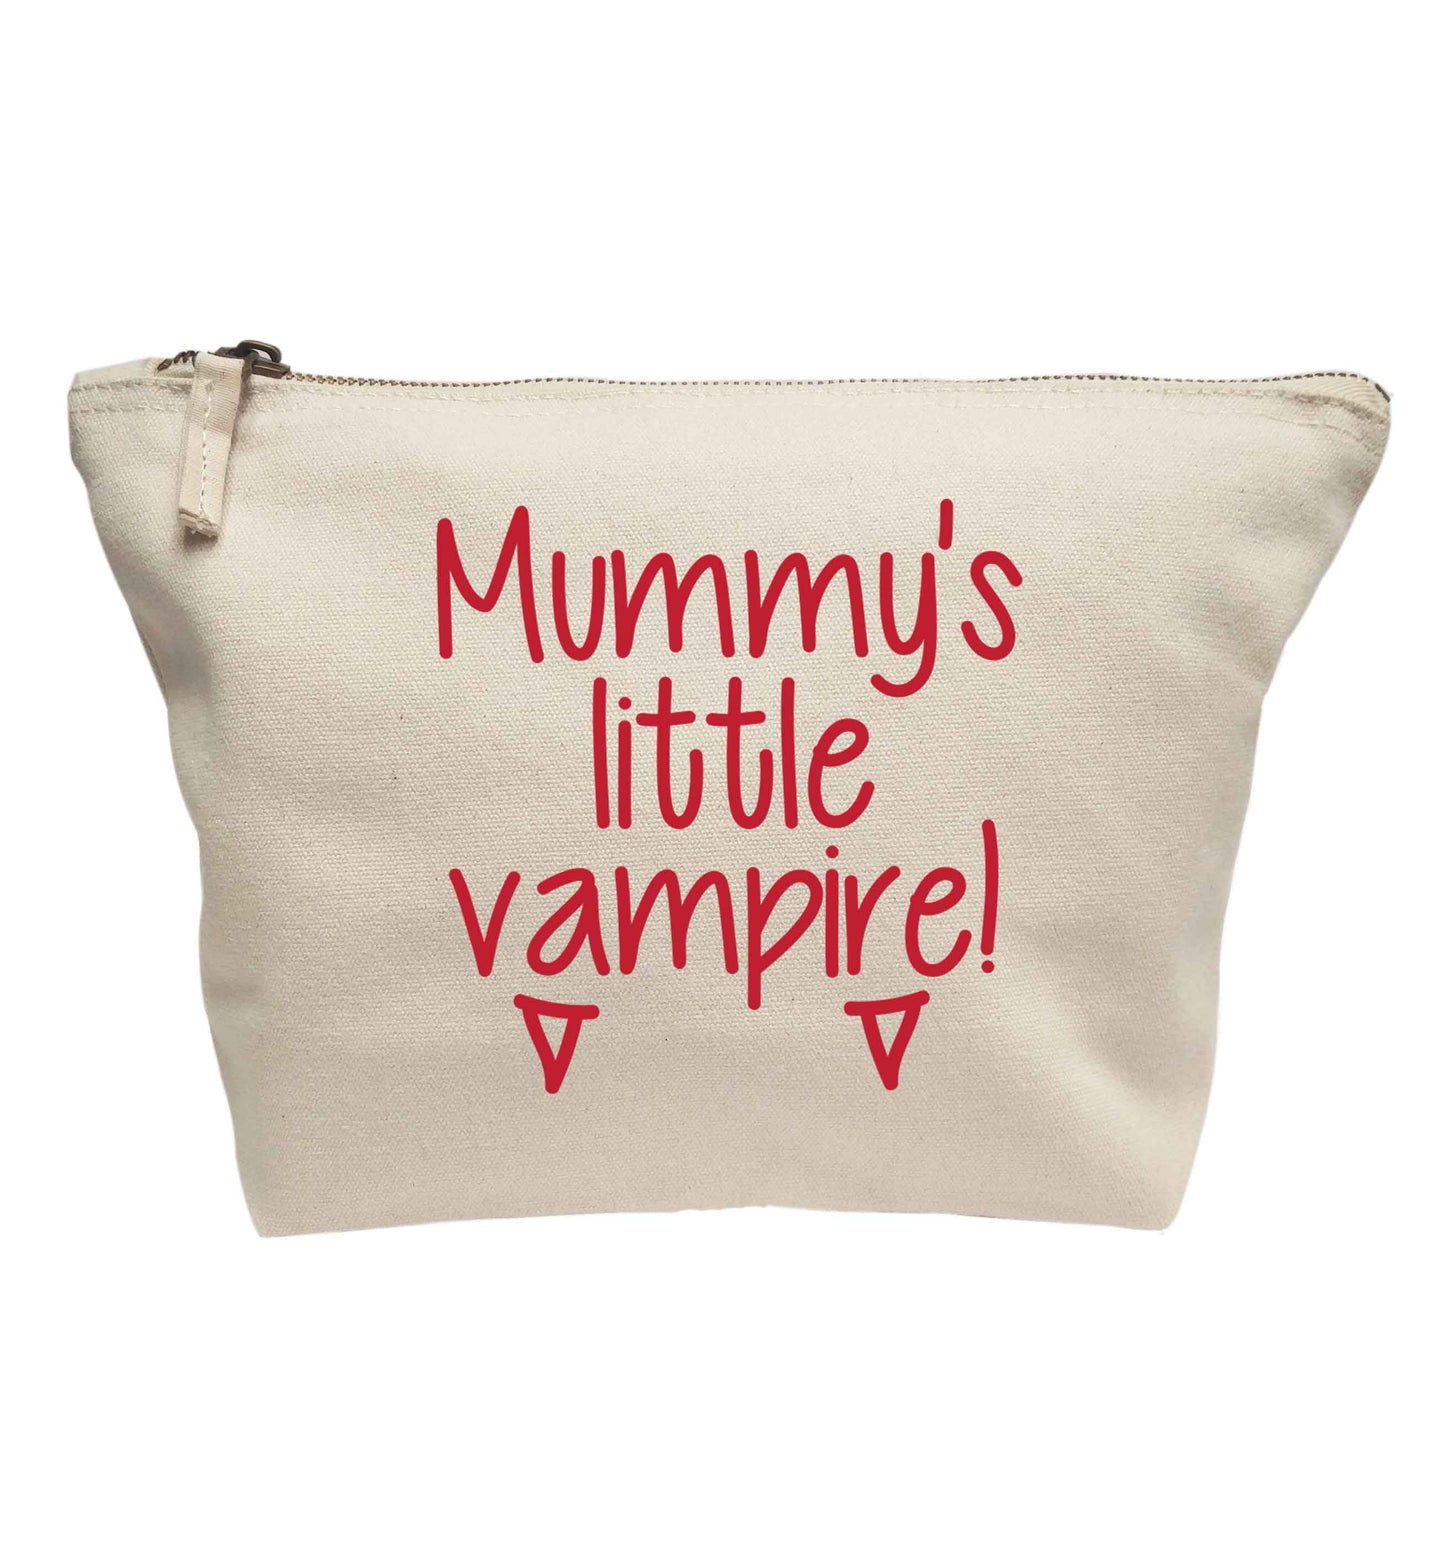 Mummy's little vampire | Makeup / wash bag